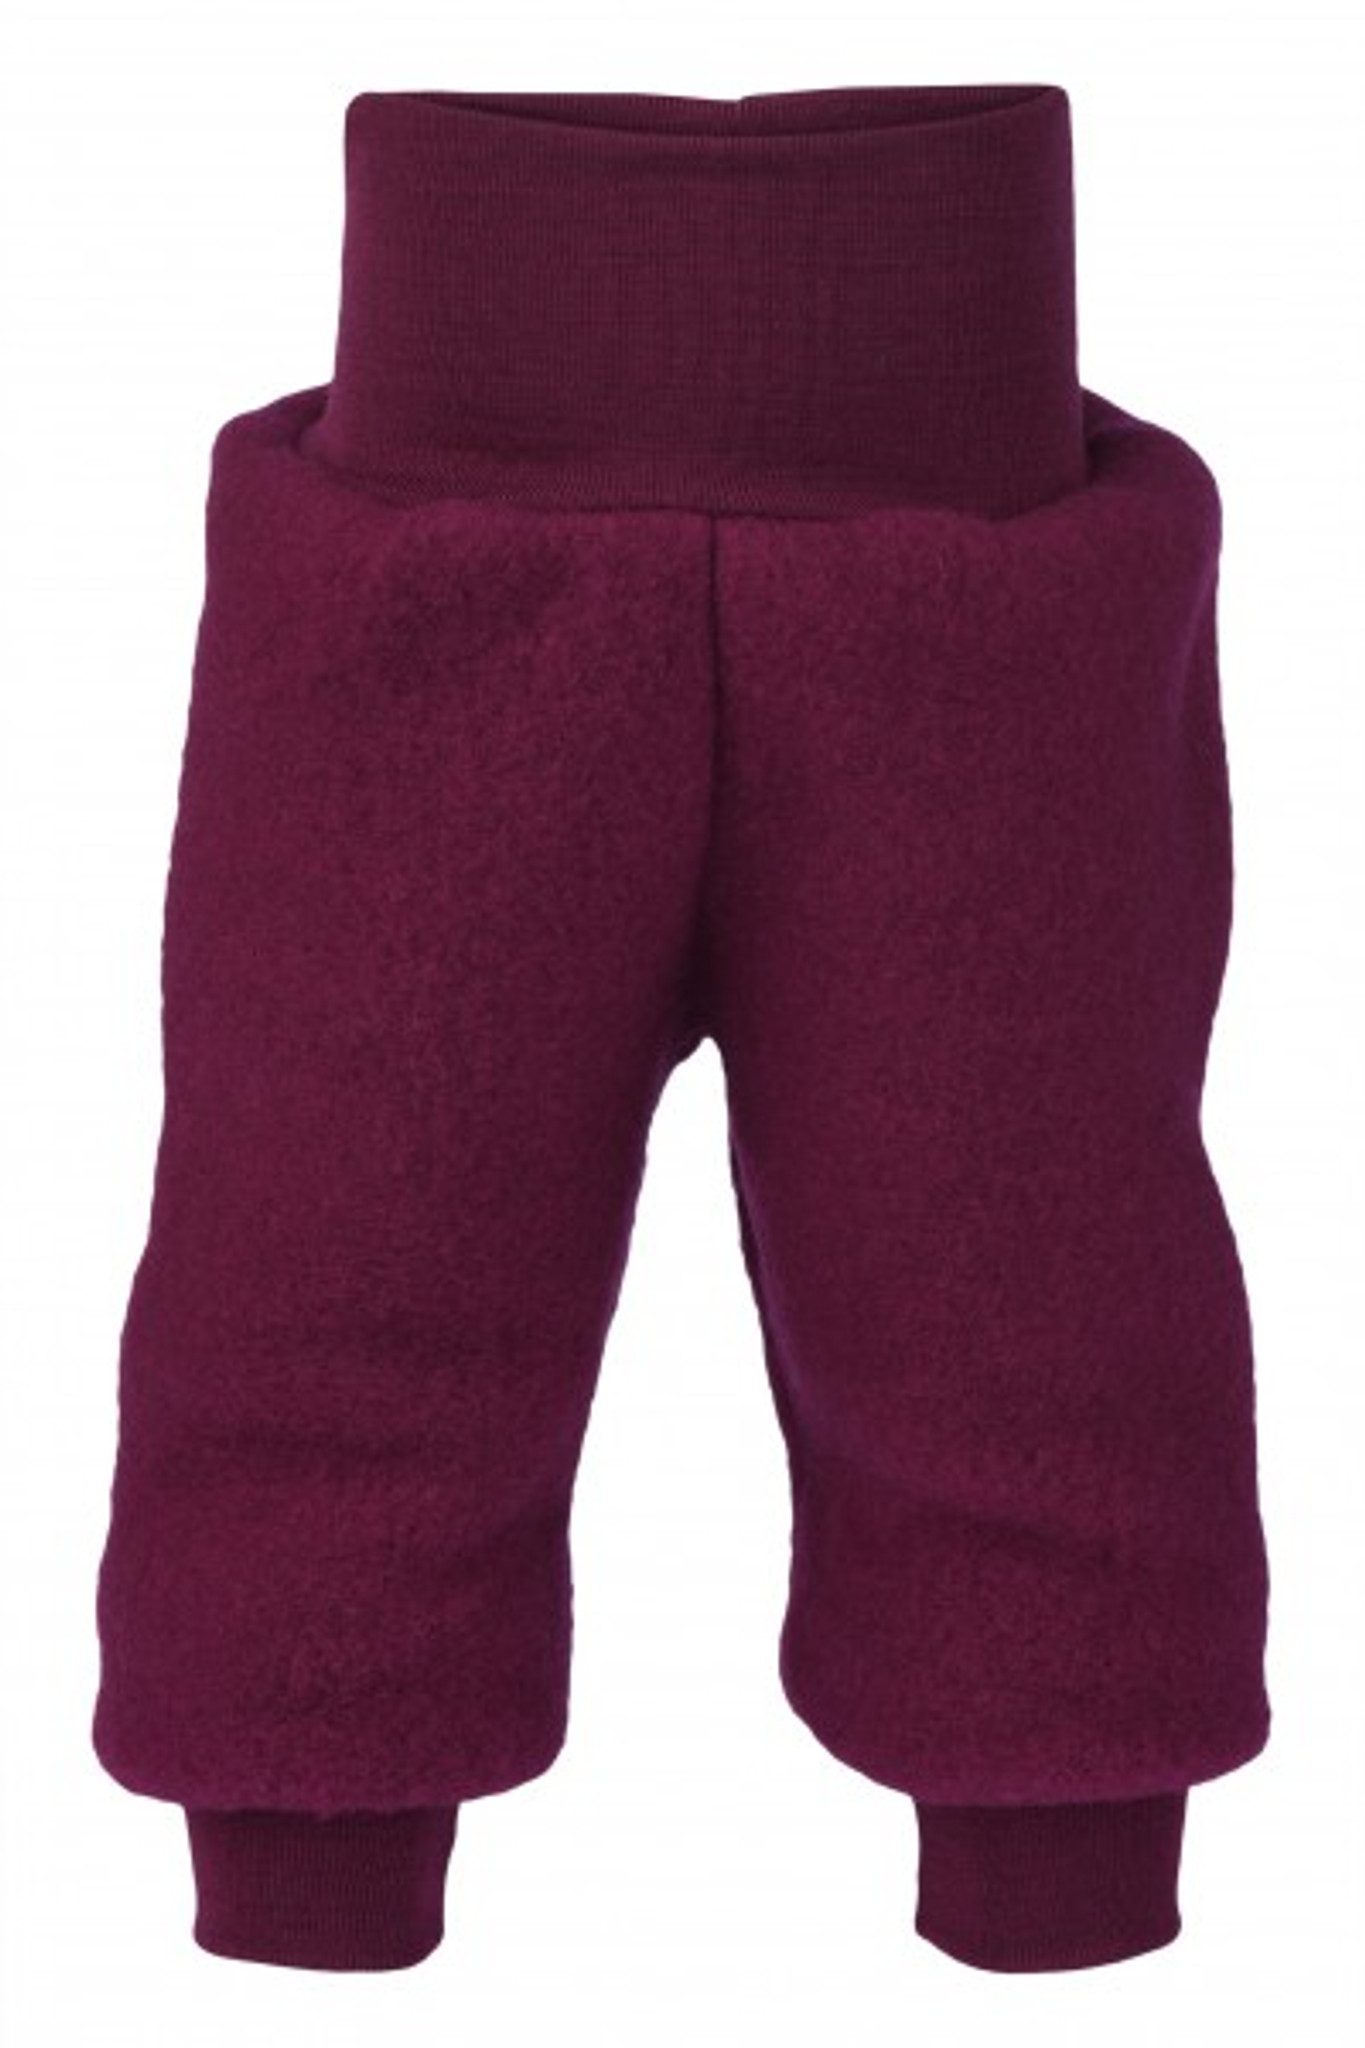 Engel 100% Organic Merino Wool Fleece Baby Pants Made in Germany.